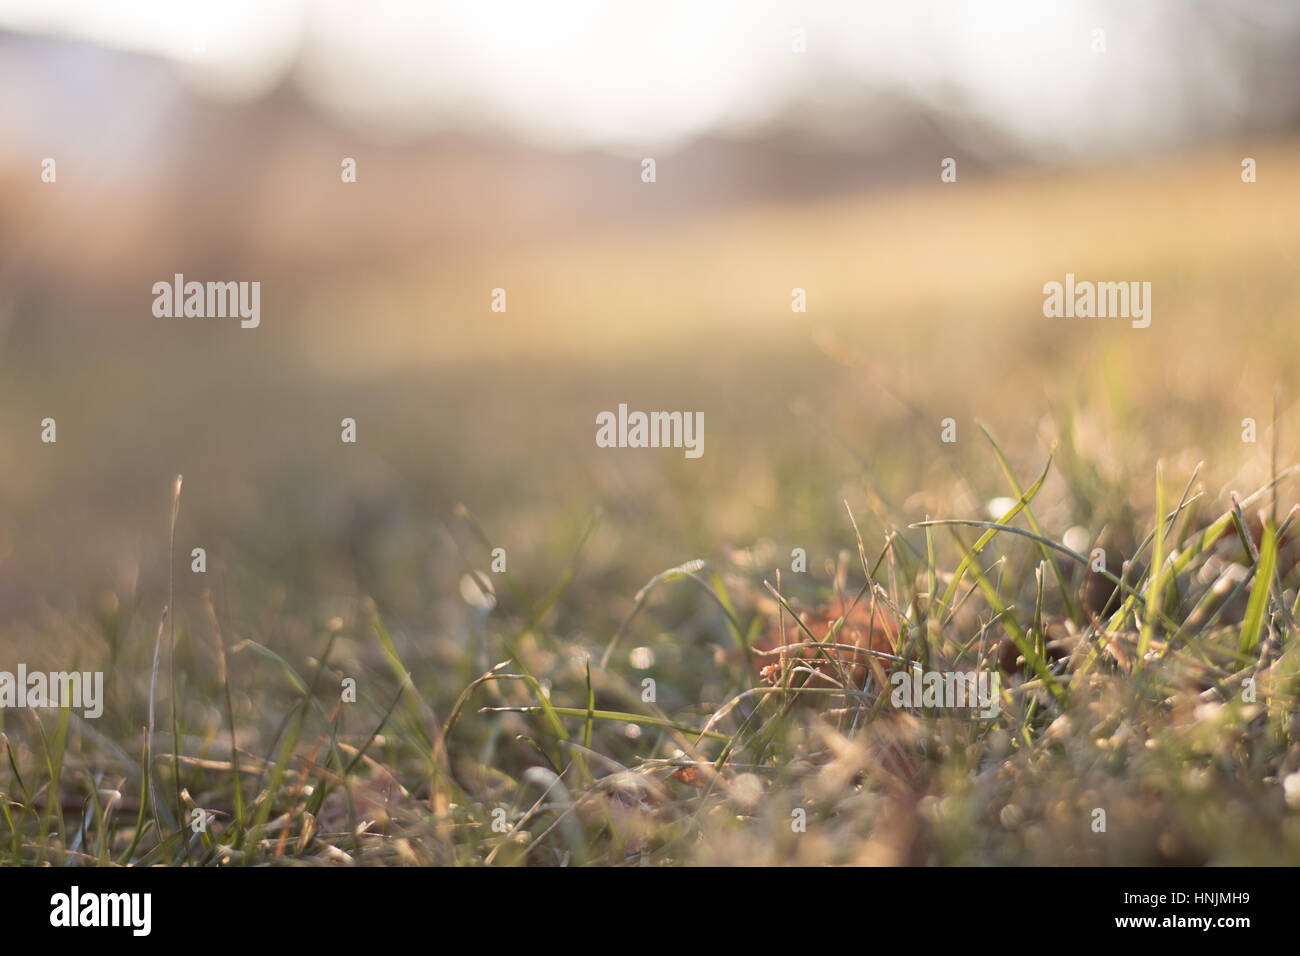 Grass background Stock Photo